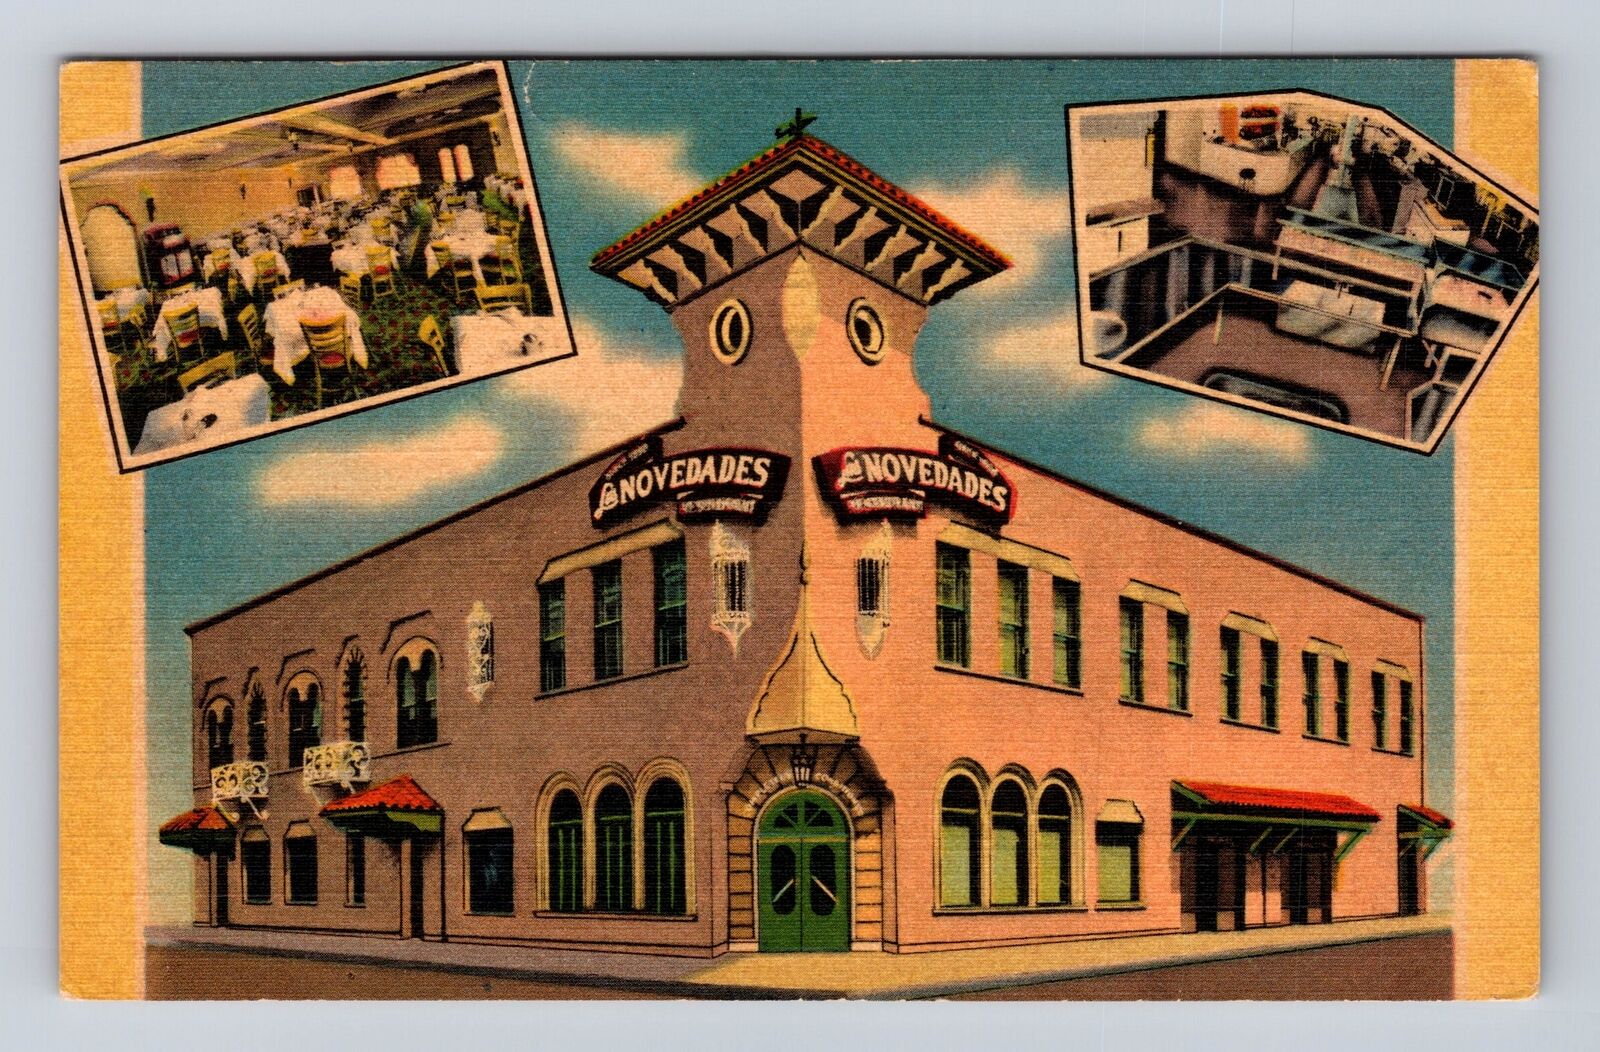 Tampa FL-Florida, Las Novedades Spanish Restaurant Advertising Vintage Postcard